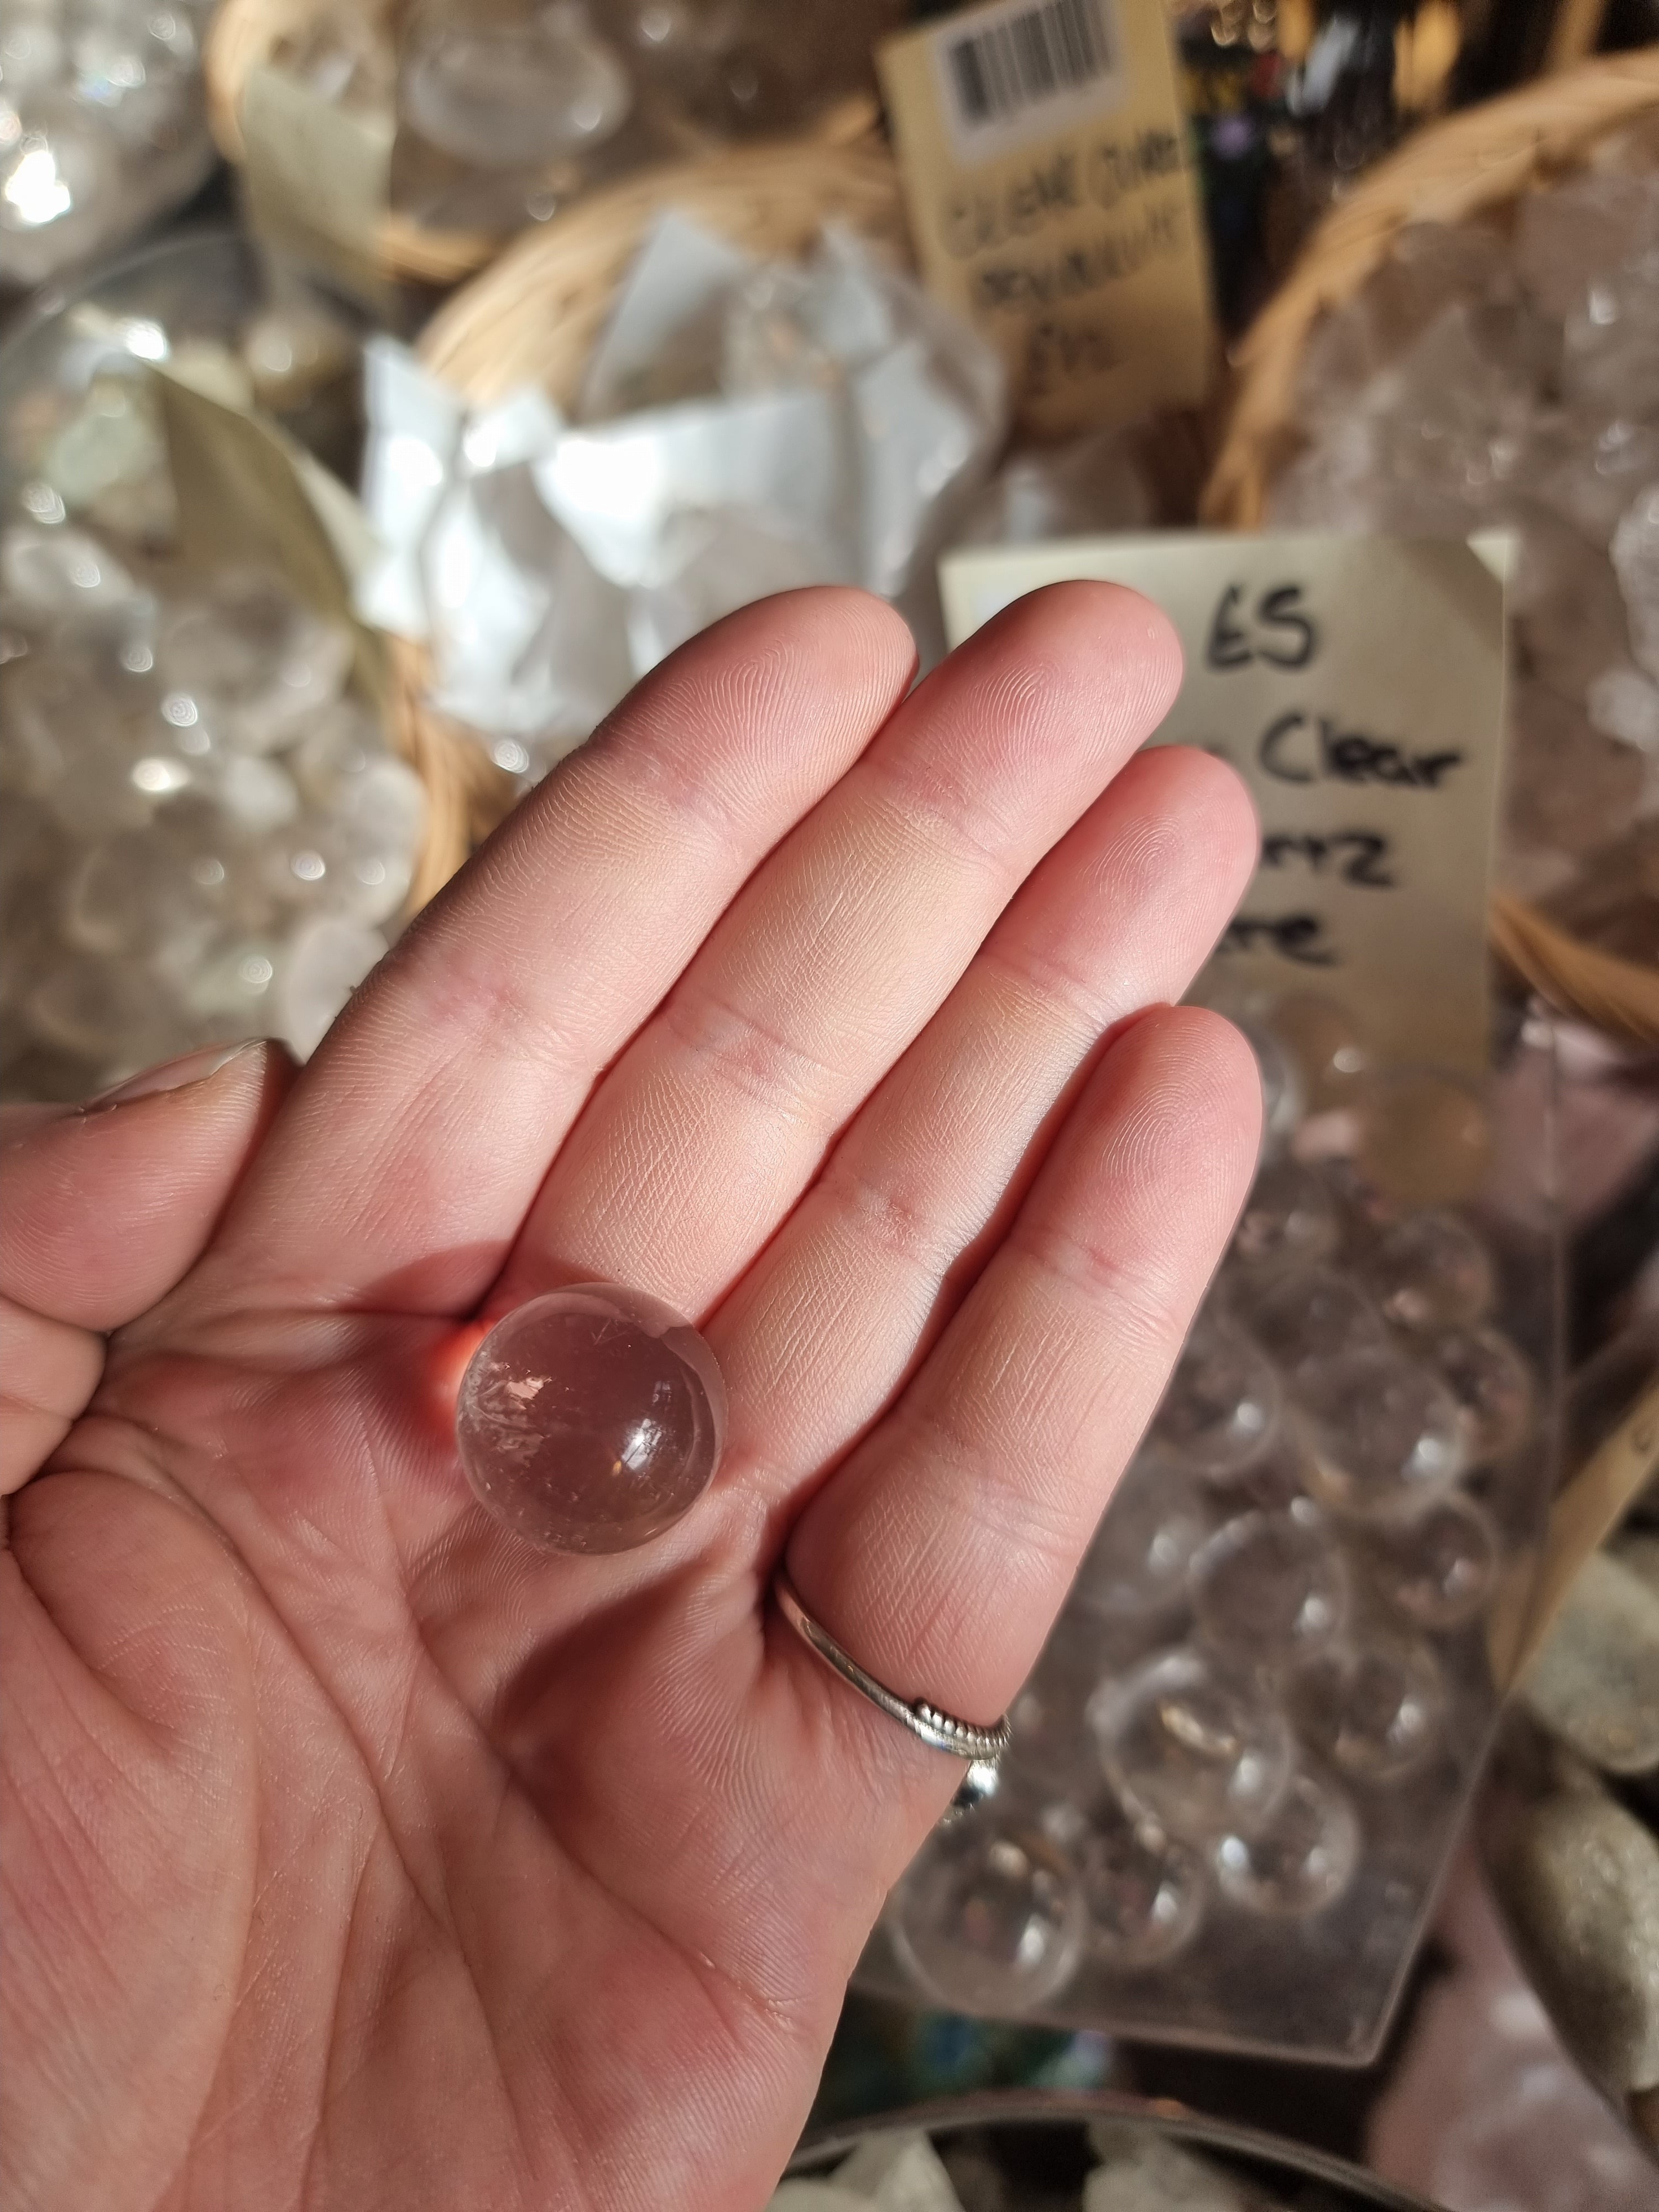 Clear Quartz Crystal Sphere (Small)